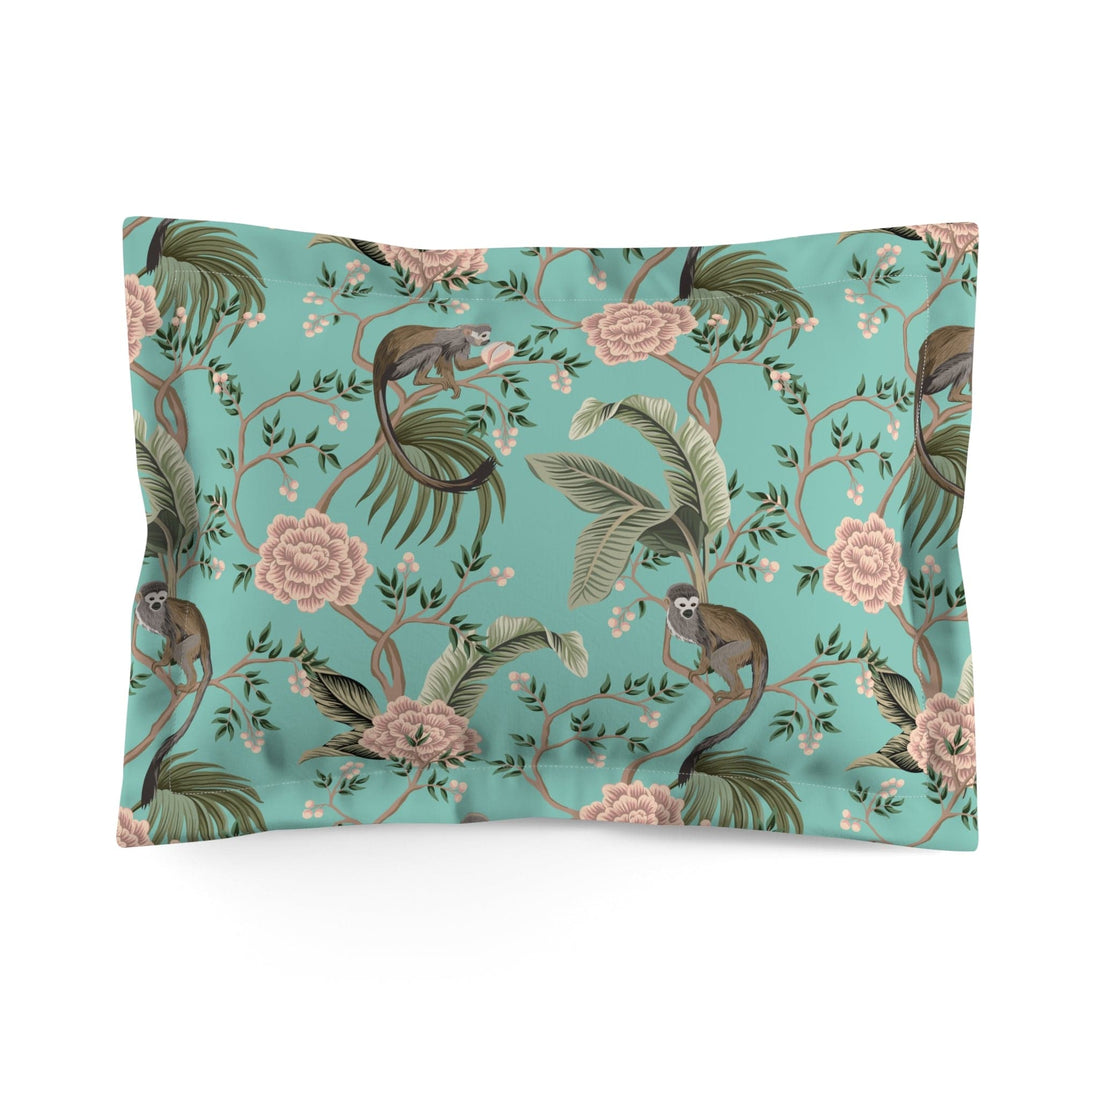 Kate McEnroe New York Chinoiserie Monkey Floral Pillow Sham, Teal Pink Botanical Toile BeddingPillow Shams12407340905099844920